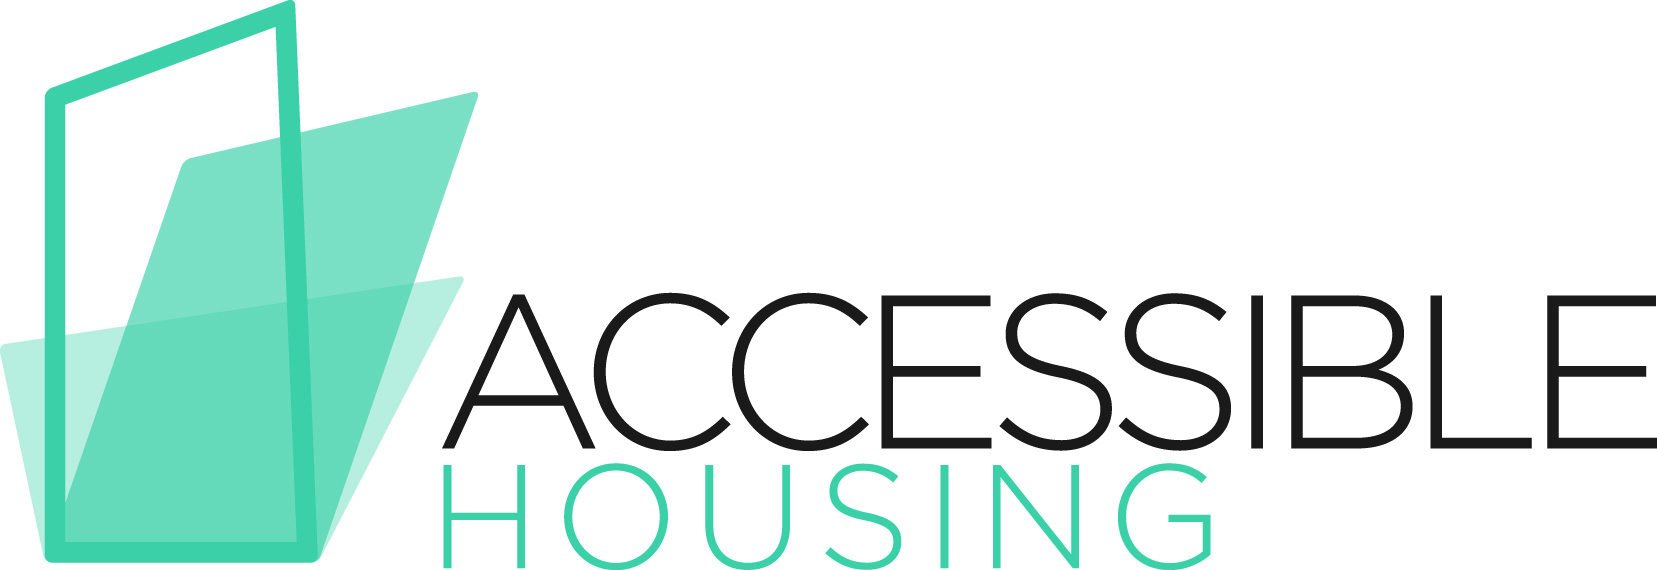 Accessible Housing - New Logo - EPS.jpg